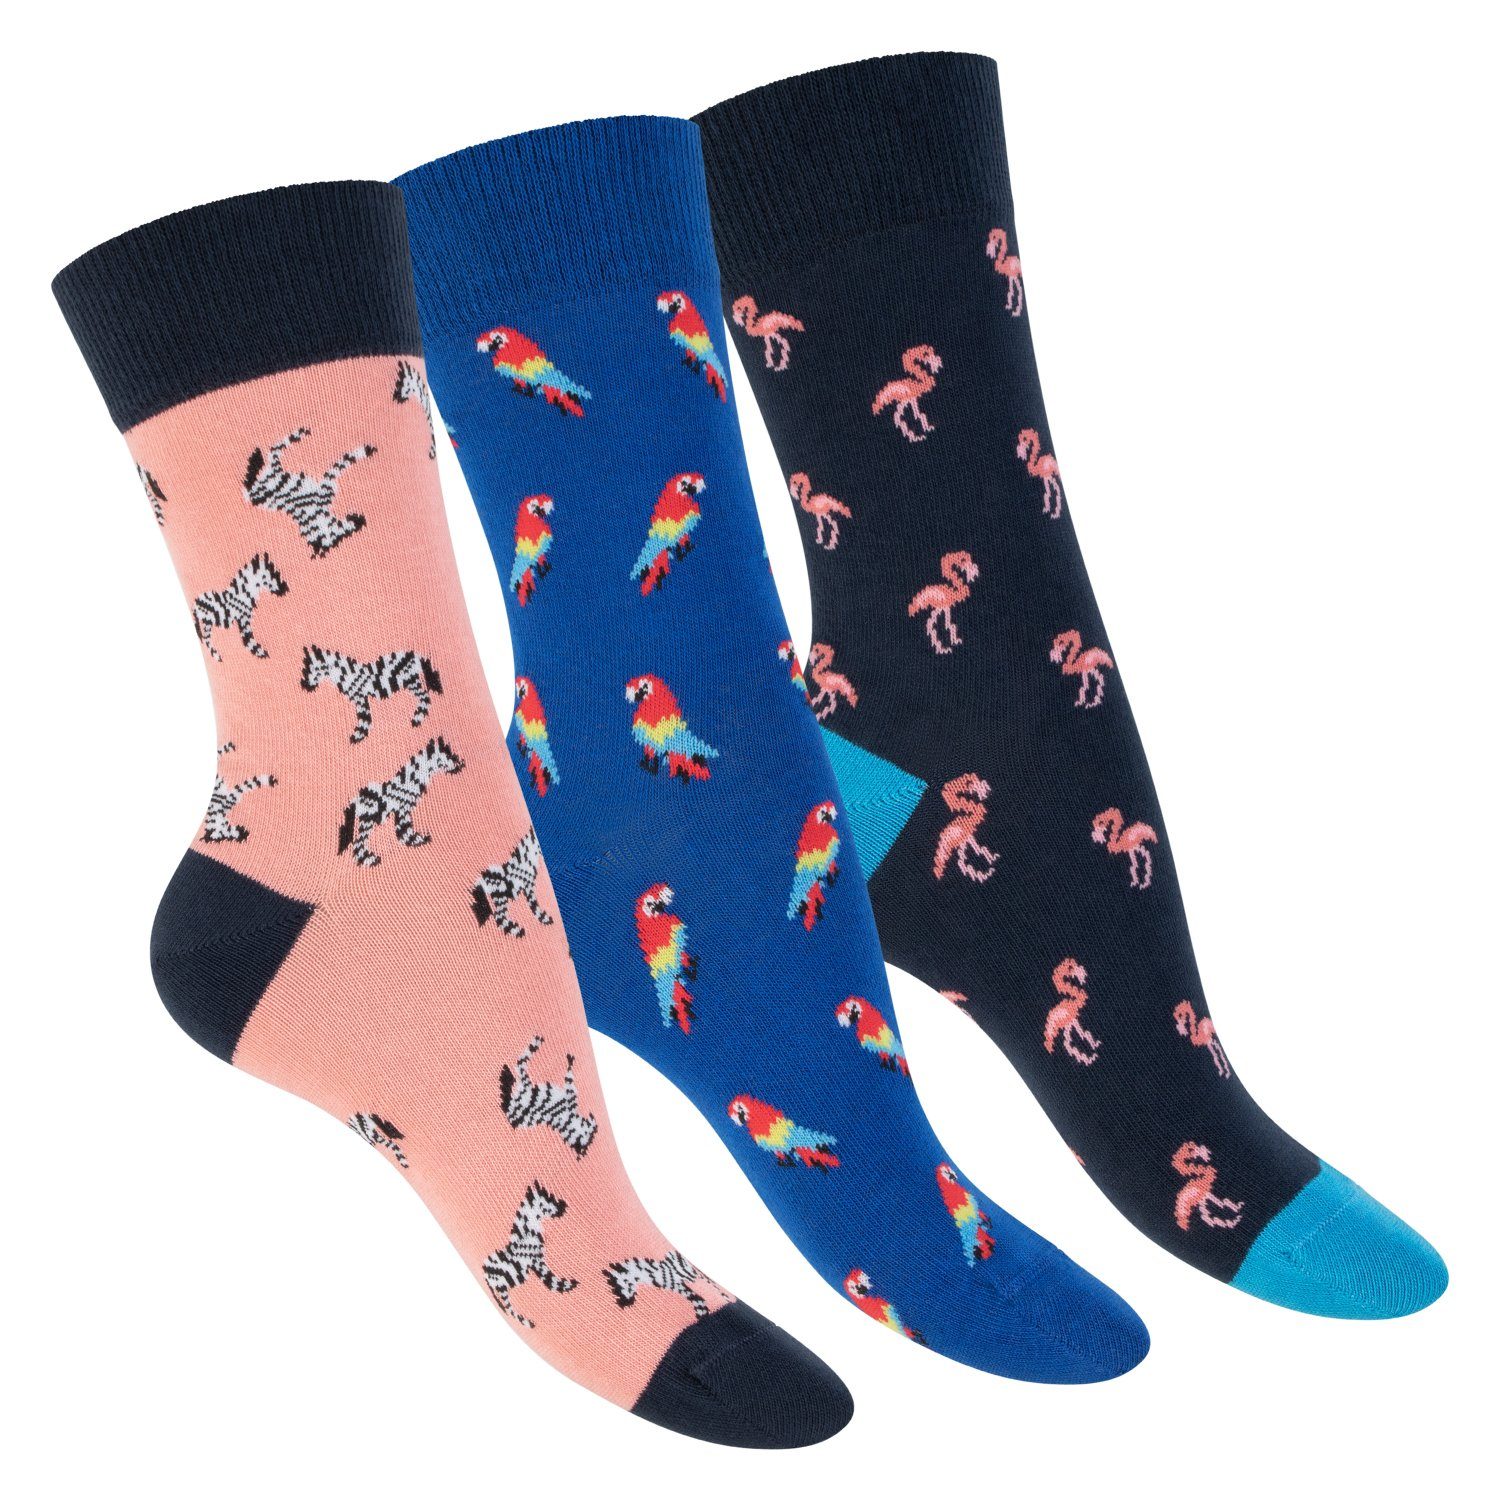 Footstar Basicsocken Damen/Herren Socken, Motiv Modische Baumwollsocken Bunte Flamingo